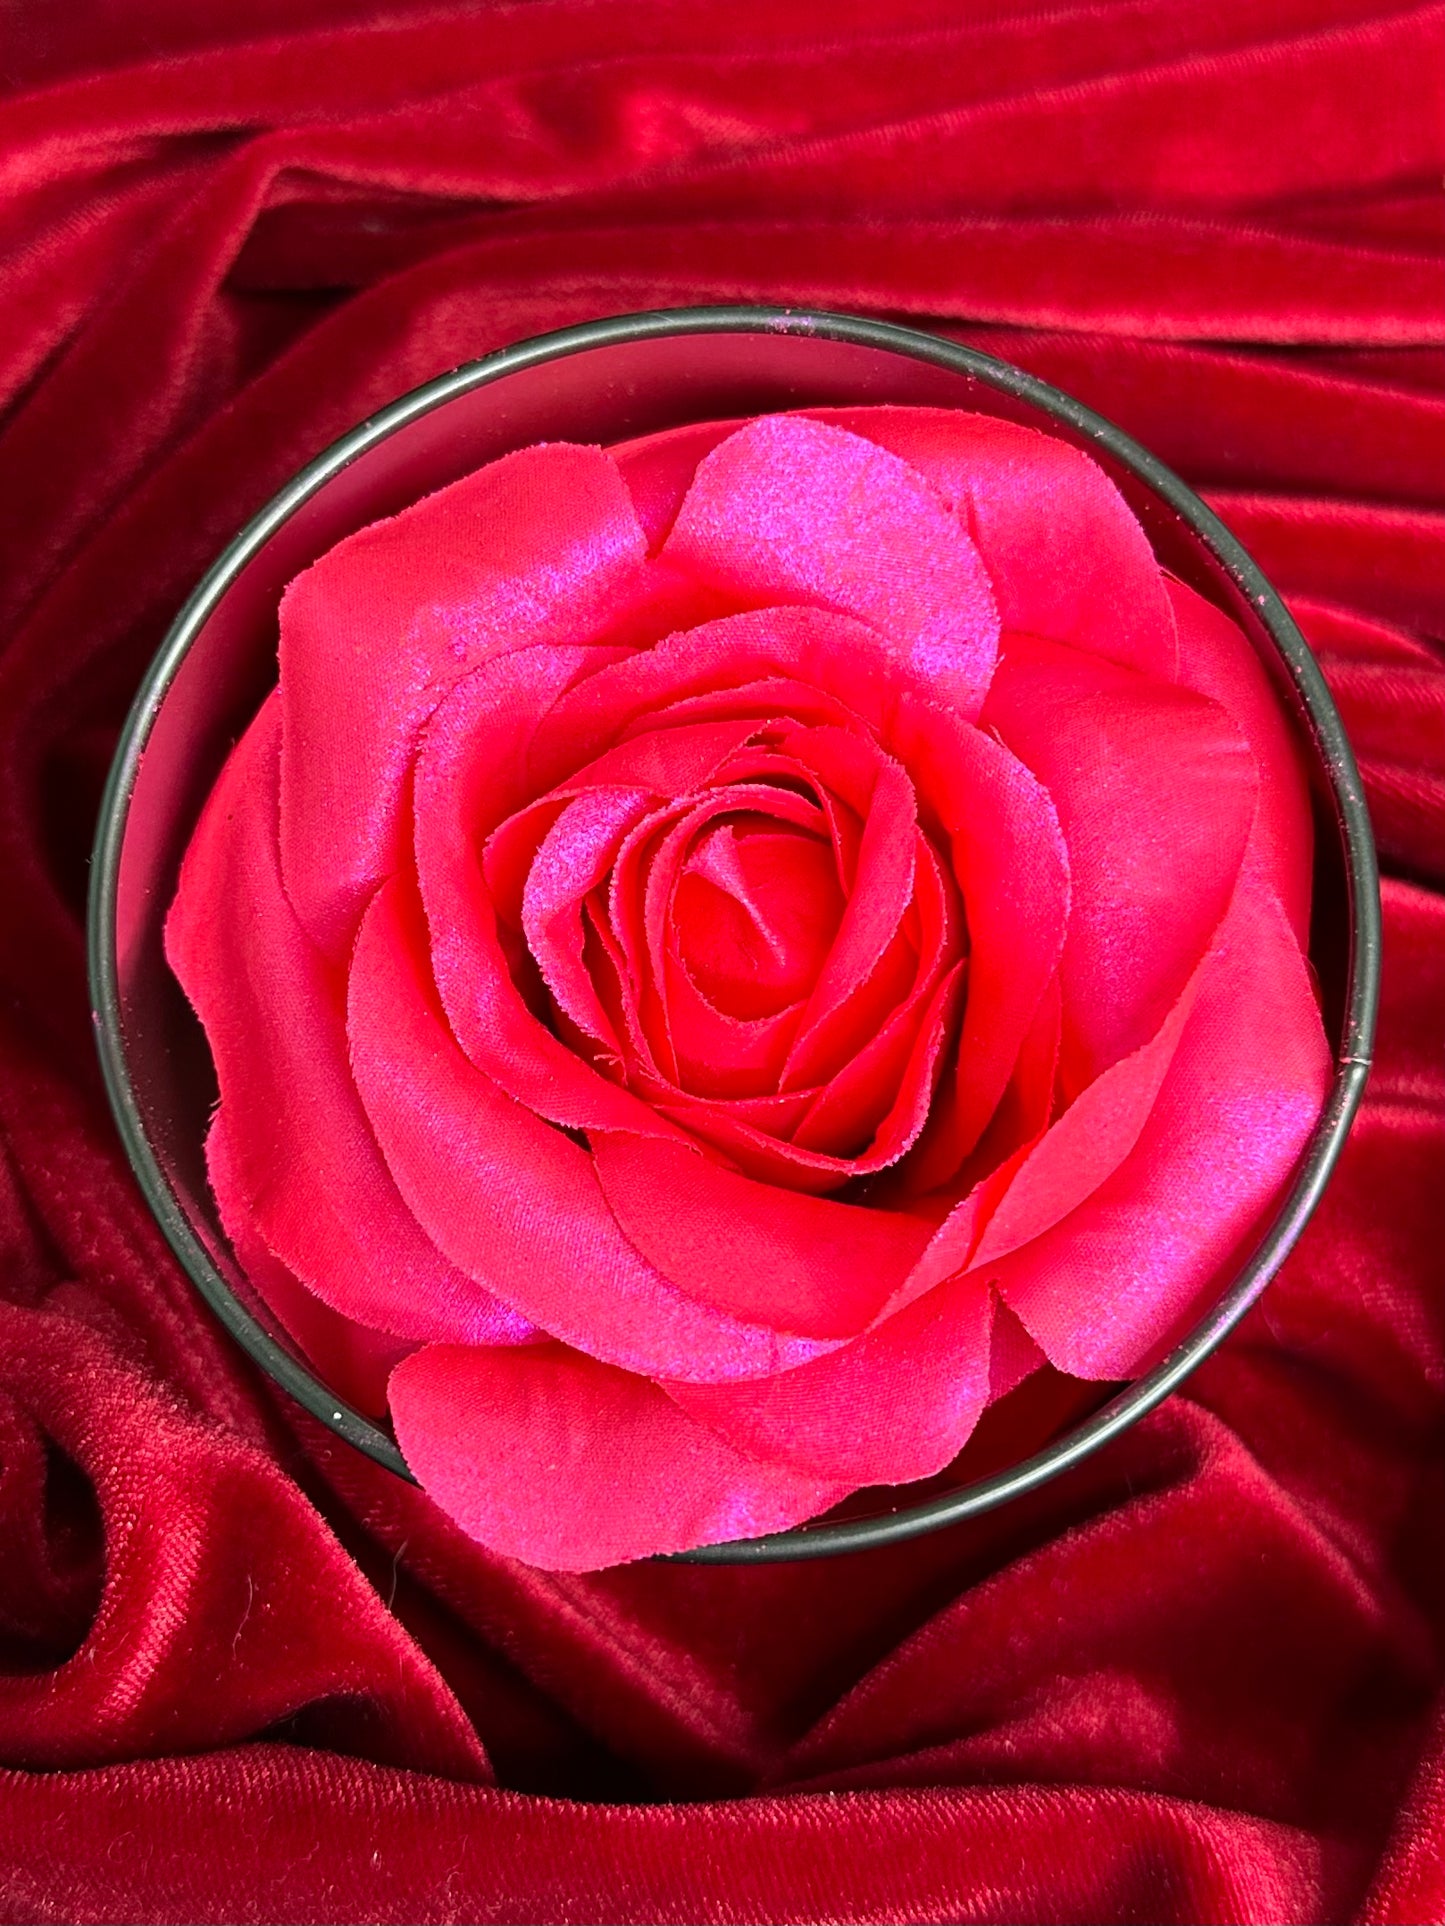 TIMES UP - rosey lush blush